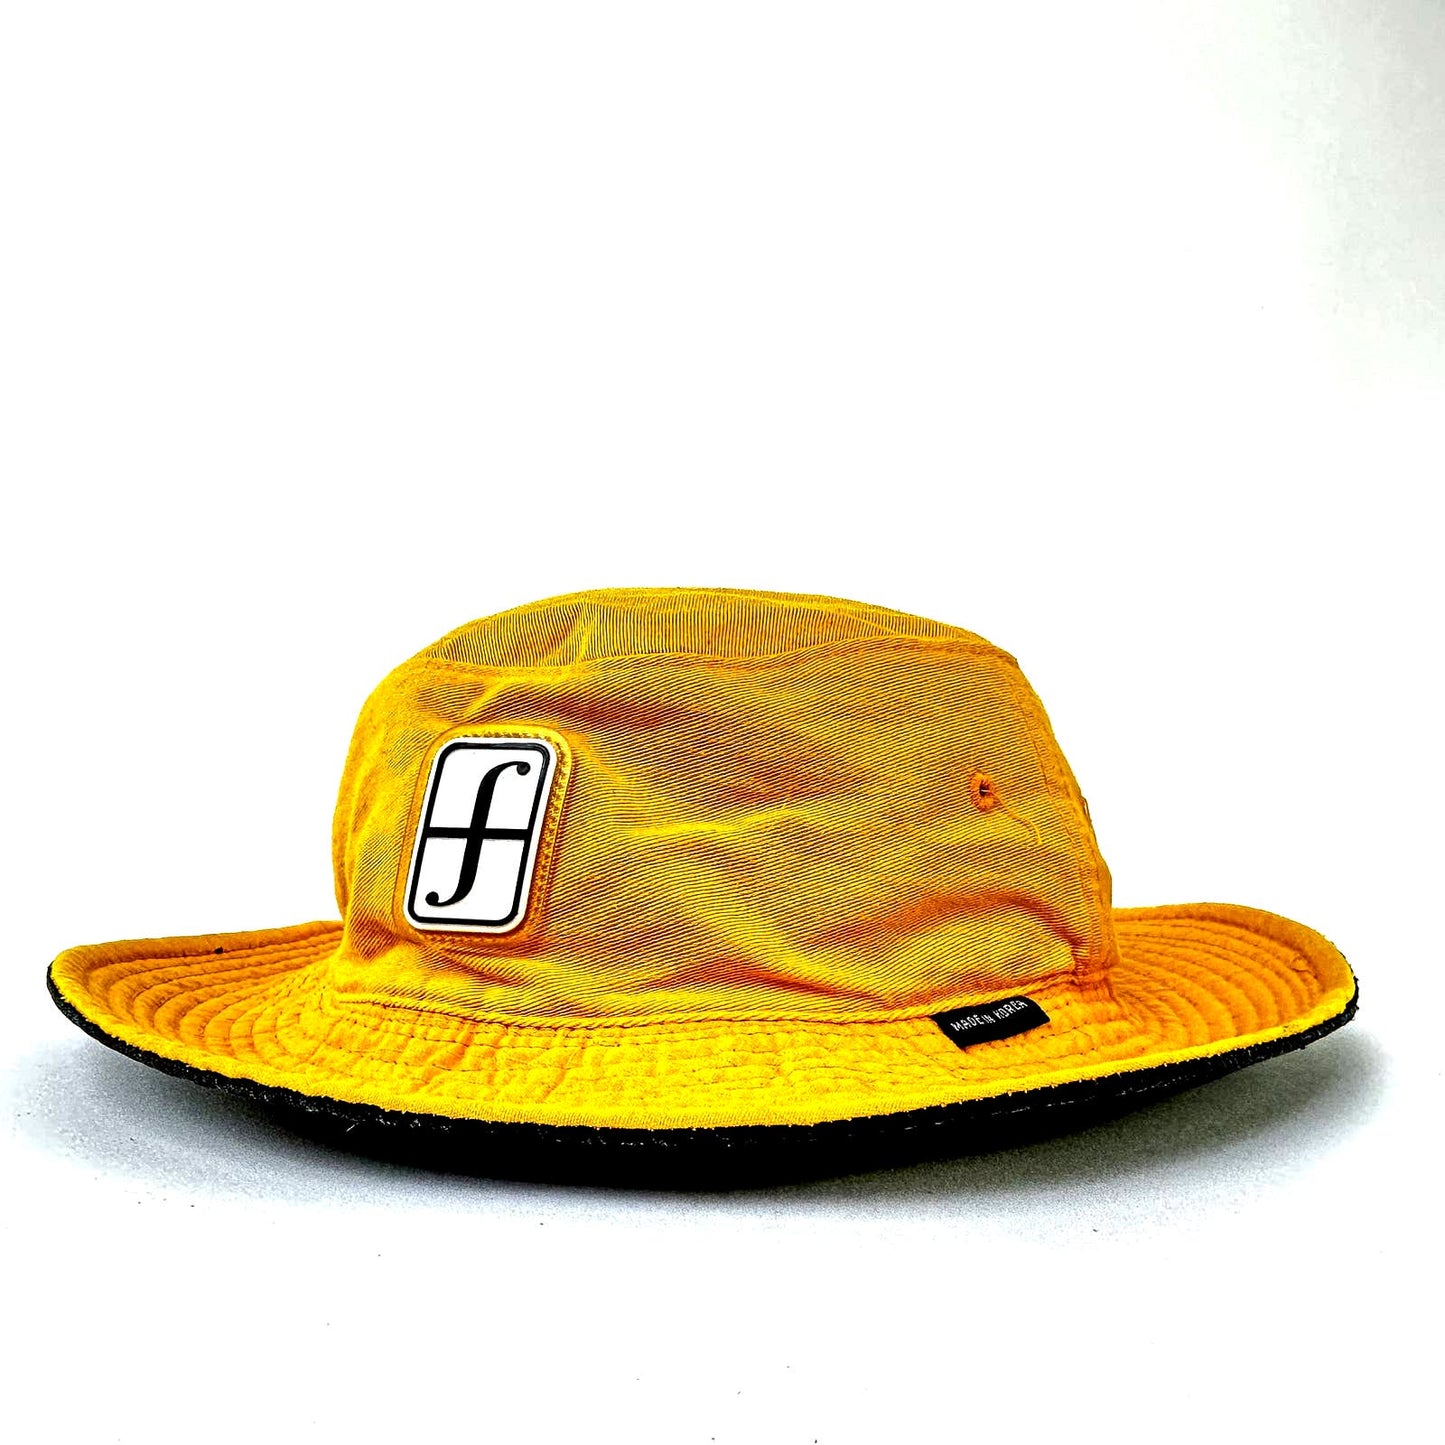 RARE Vintage 1996 FORUM Snowboard Reversible Bucket Hat